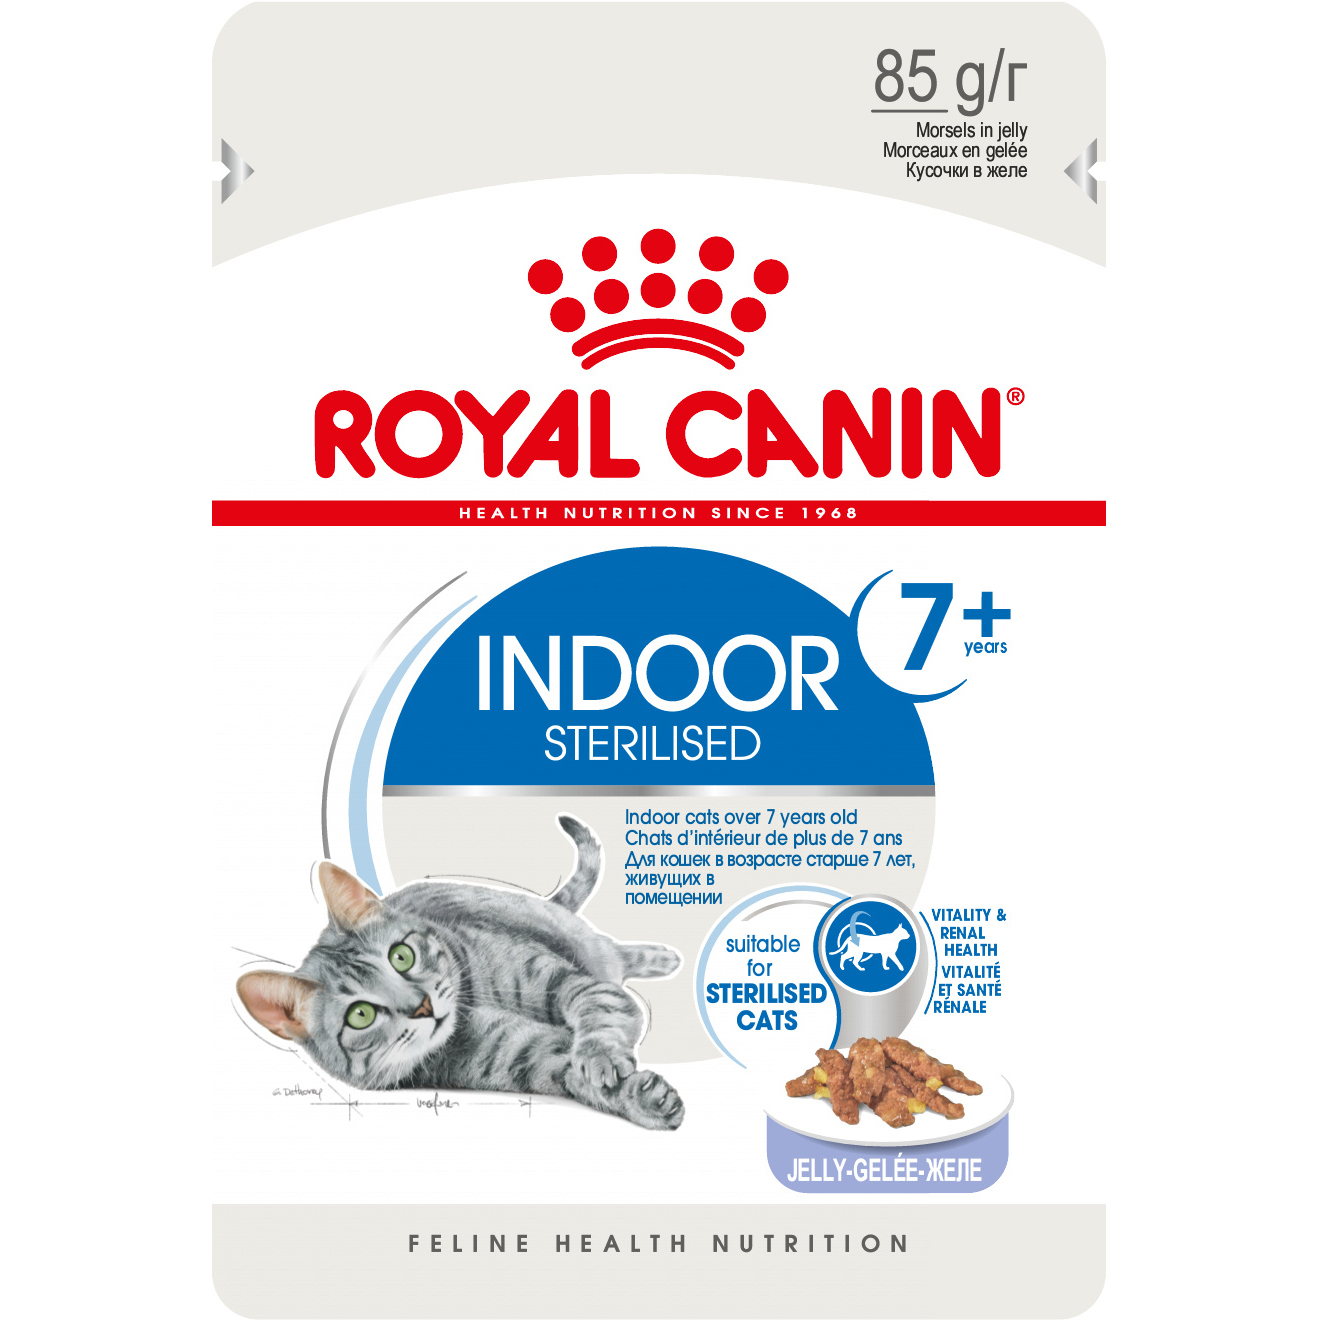 фото Корм для кошек royal сanin indoor sterilised 7+ years в желе 85 г royal canin